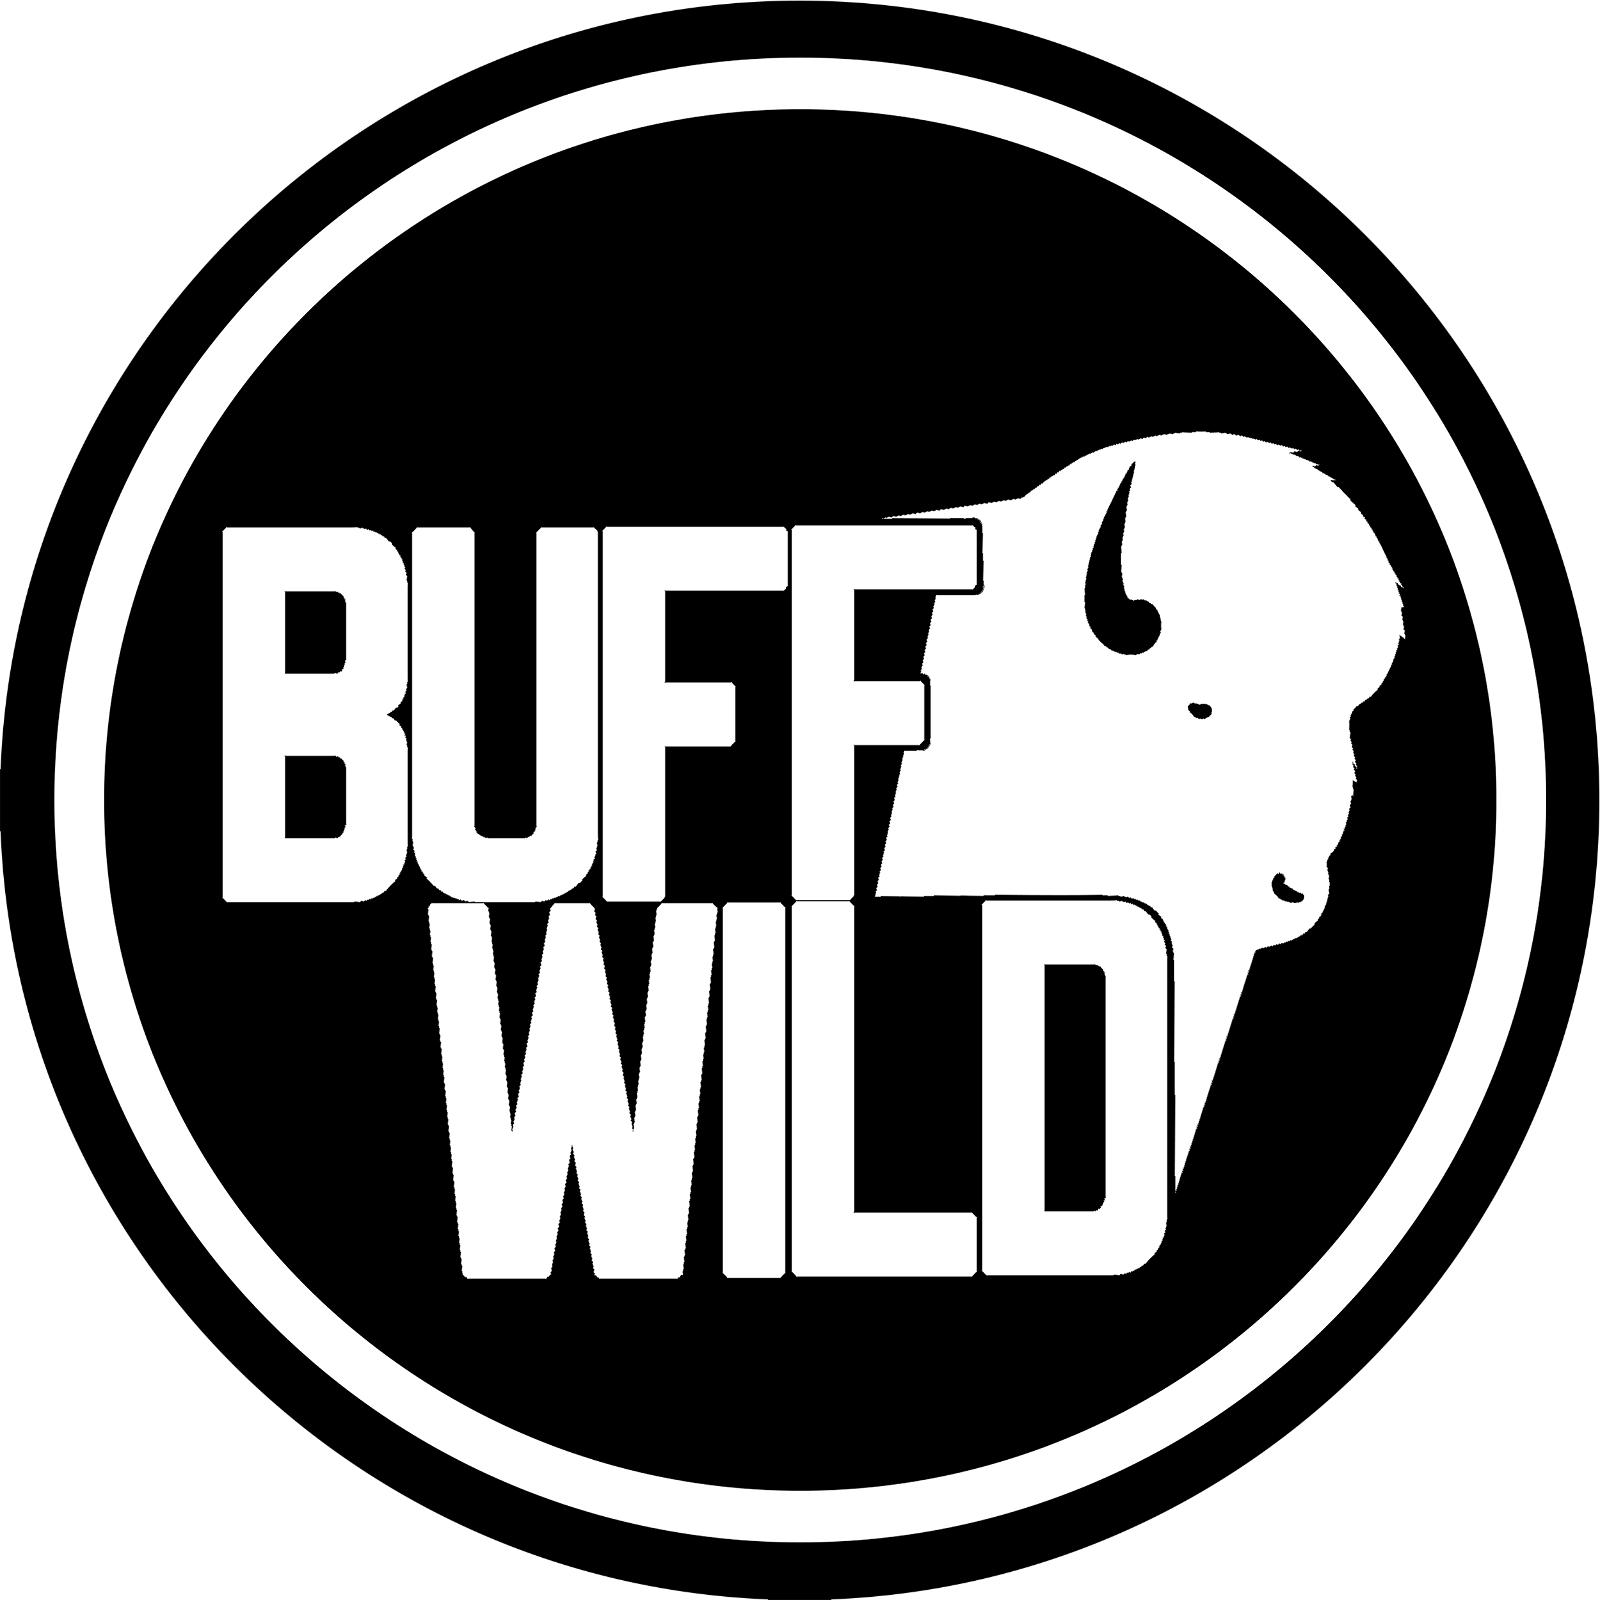 Buff Wild Crew Logo